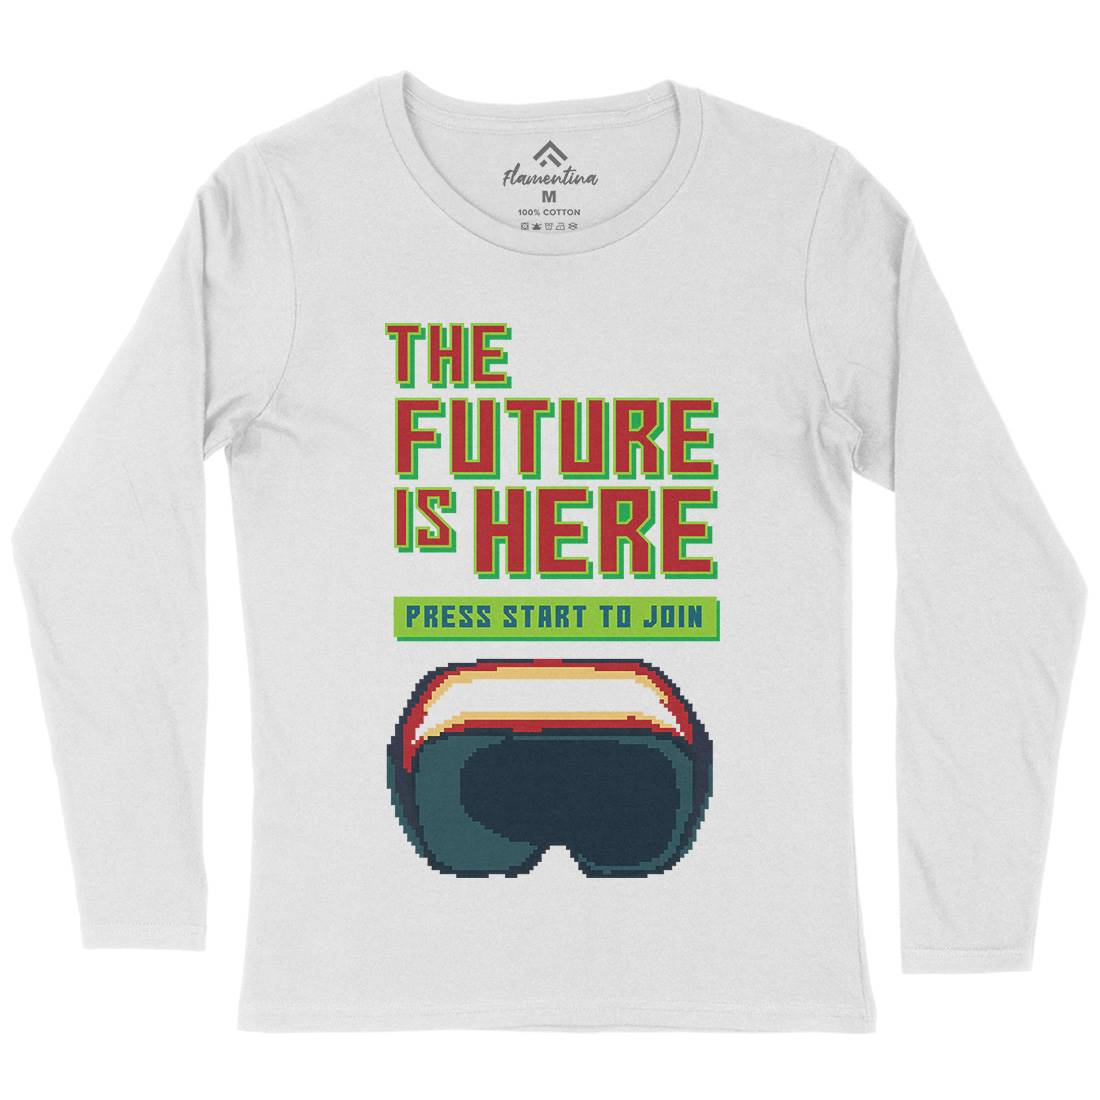 The Future Is Here Womens Long Sleeve T-Shirt Geek B967